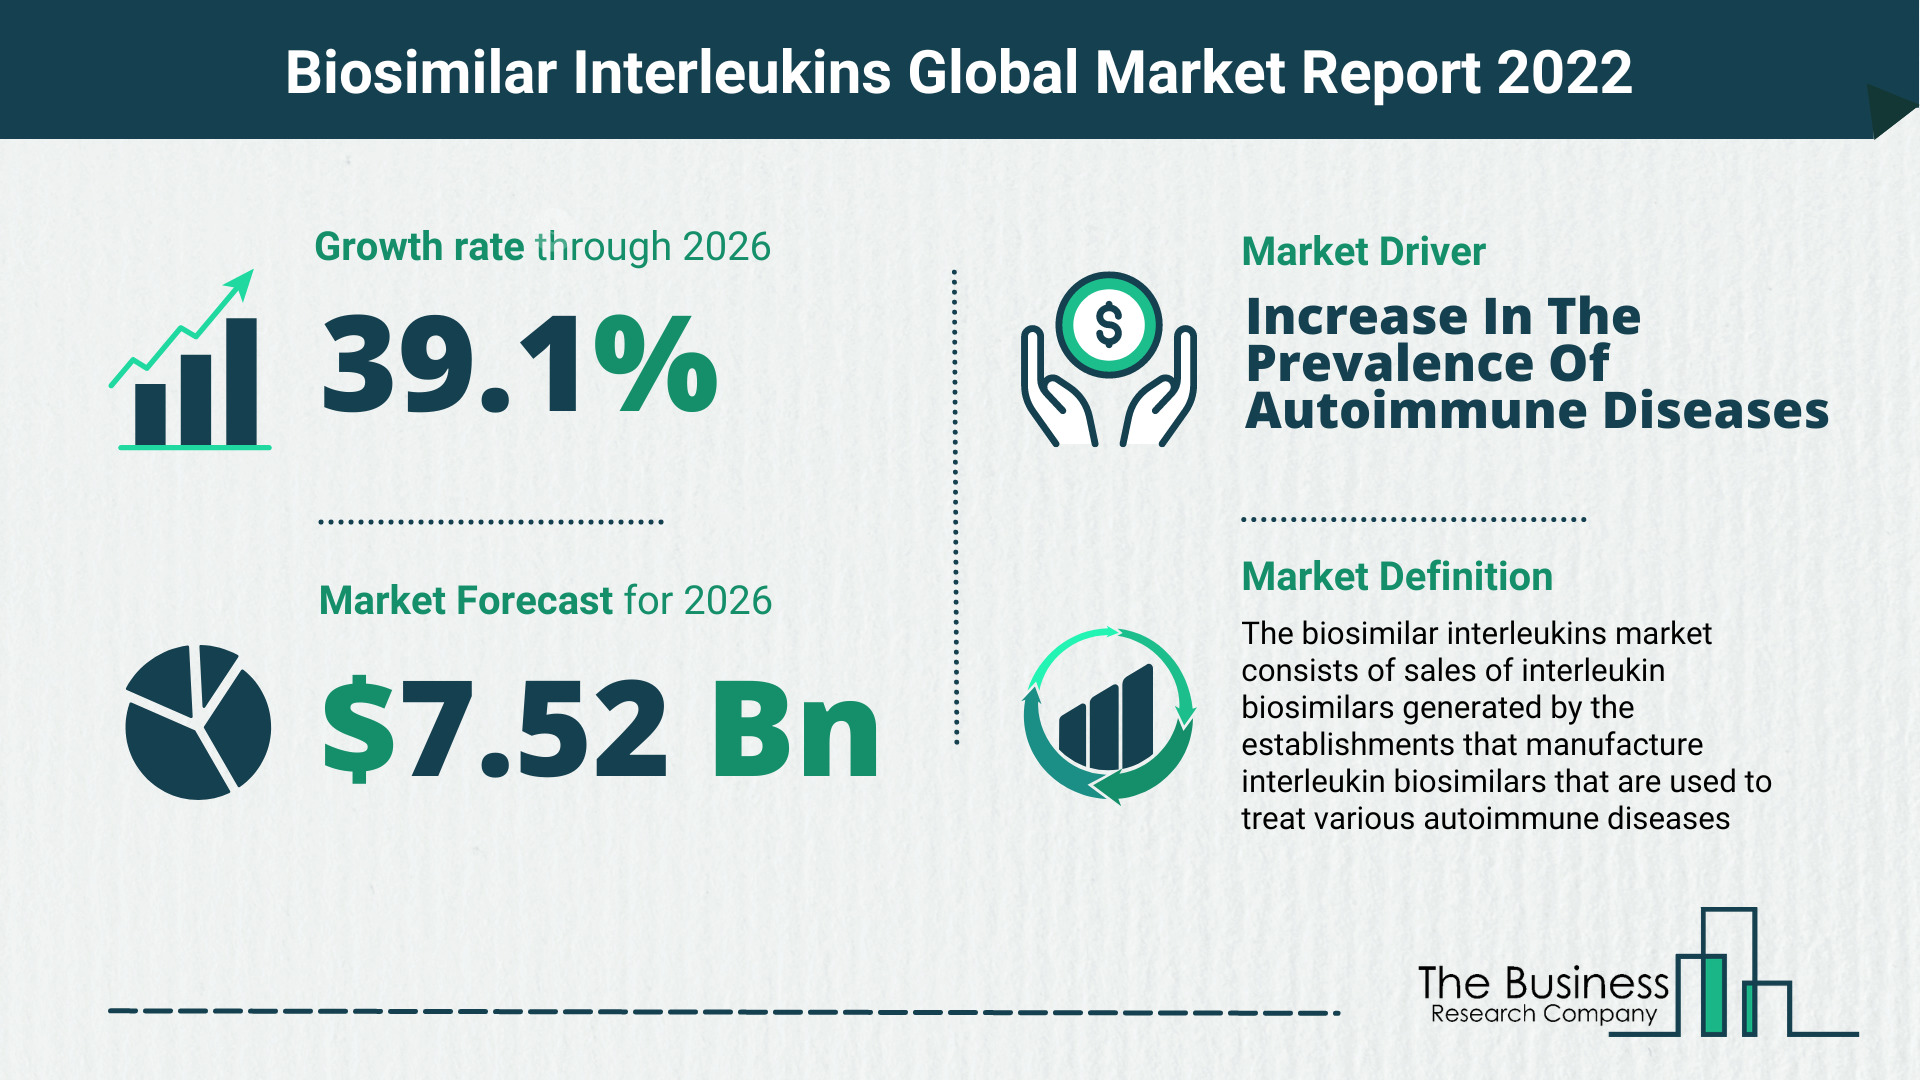 How Will The Biosimilar Interleukins Market Grow In 2022?